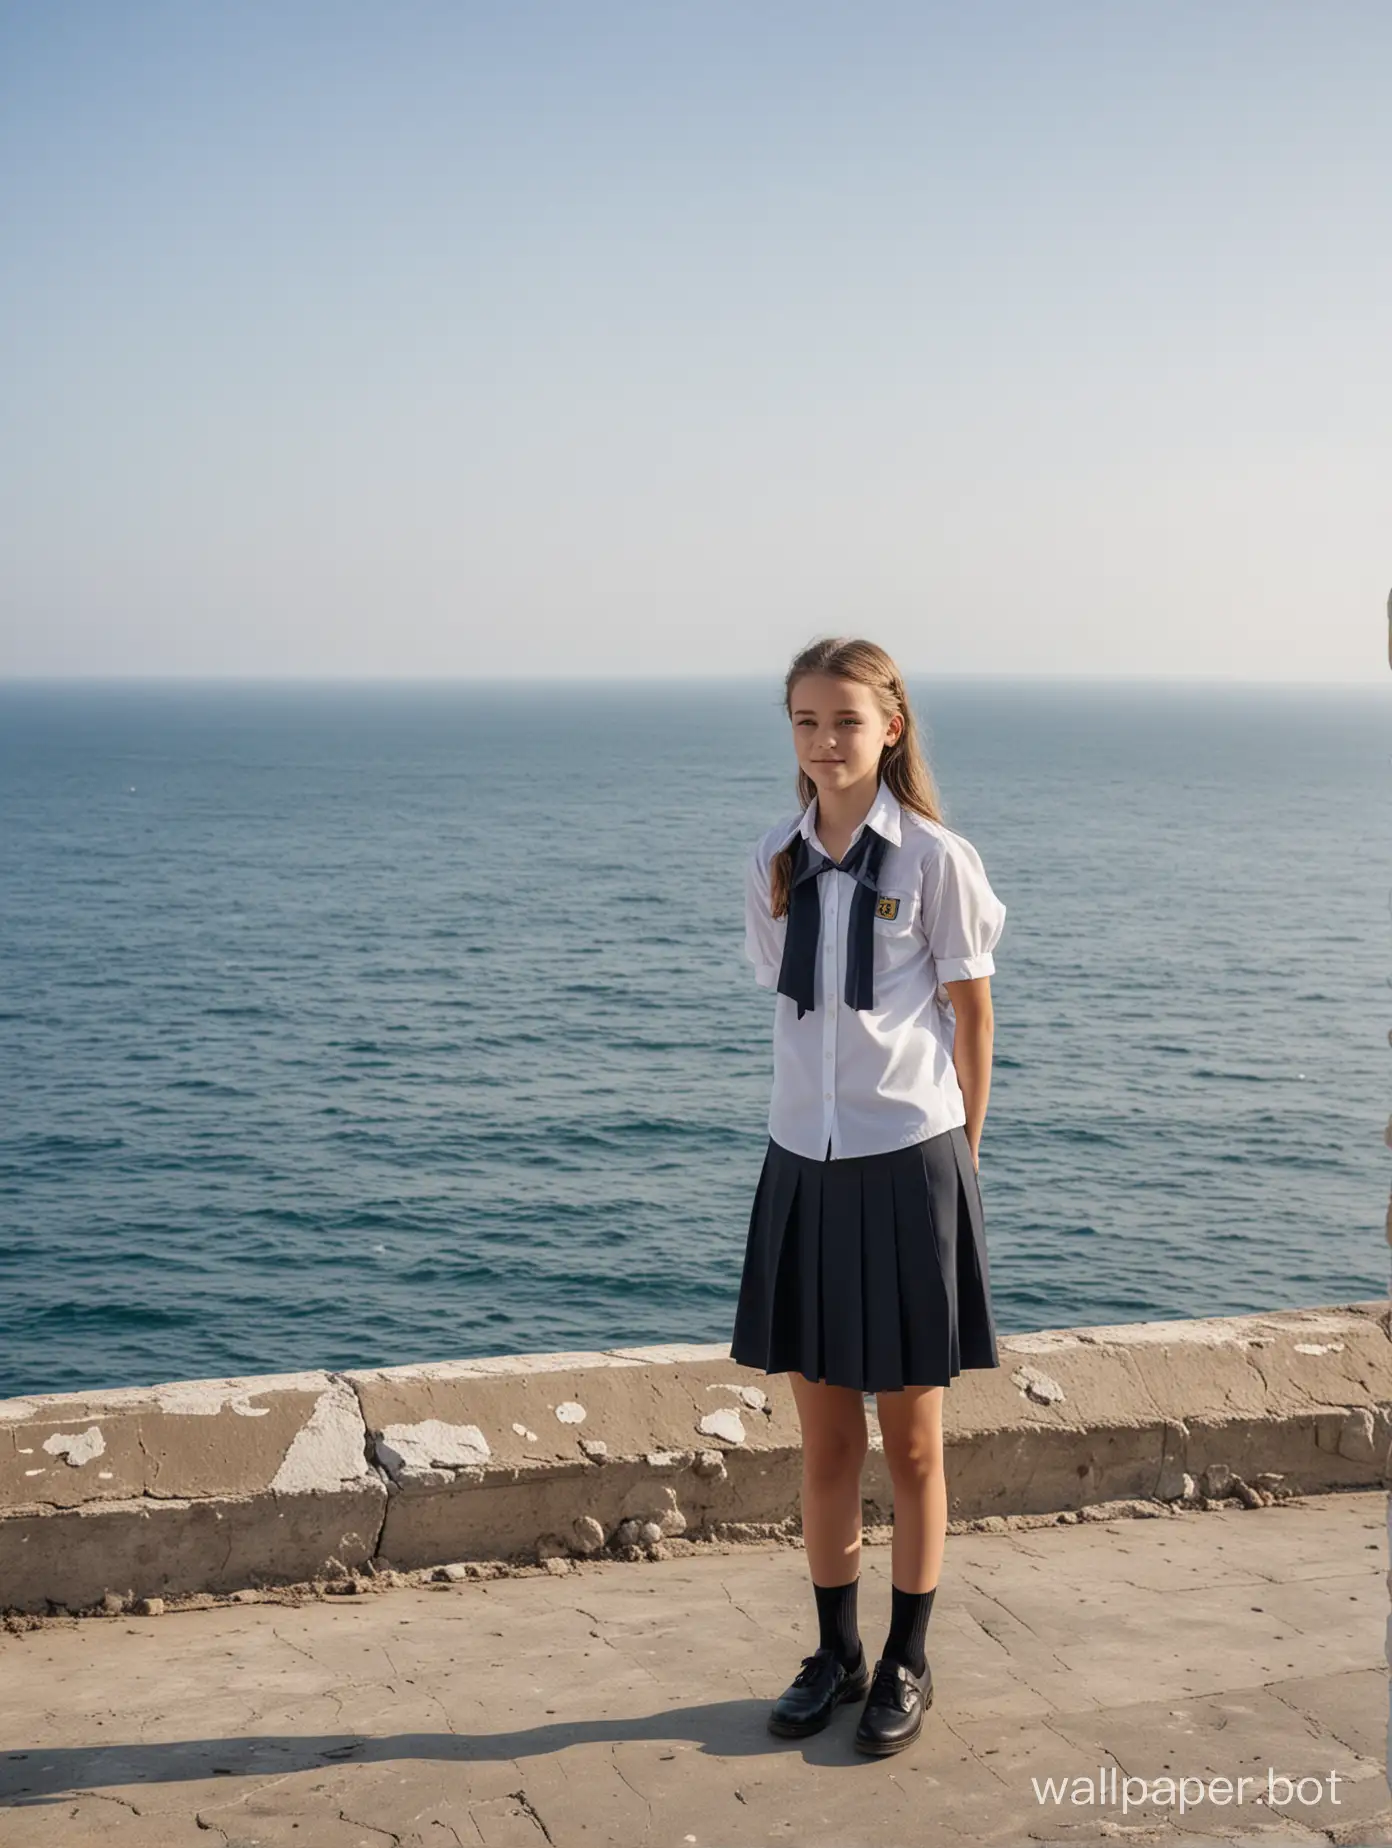 11YearOld-Girl-in-Crimea-School-Uniform-with-Sea-View